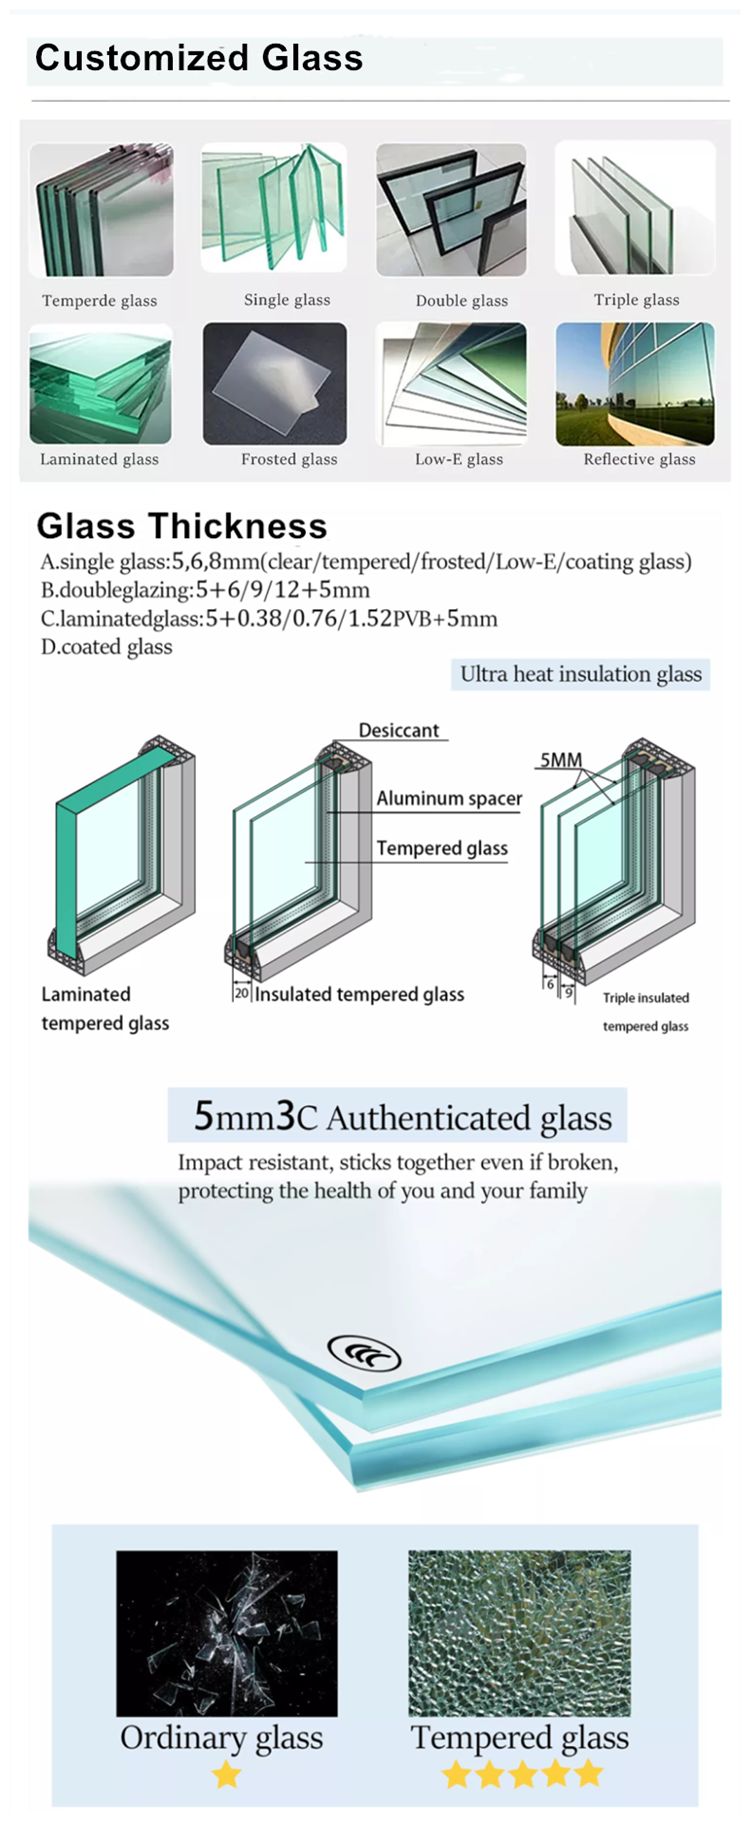 custom glass for windows